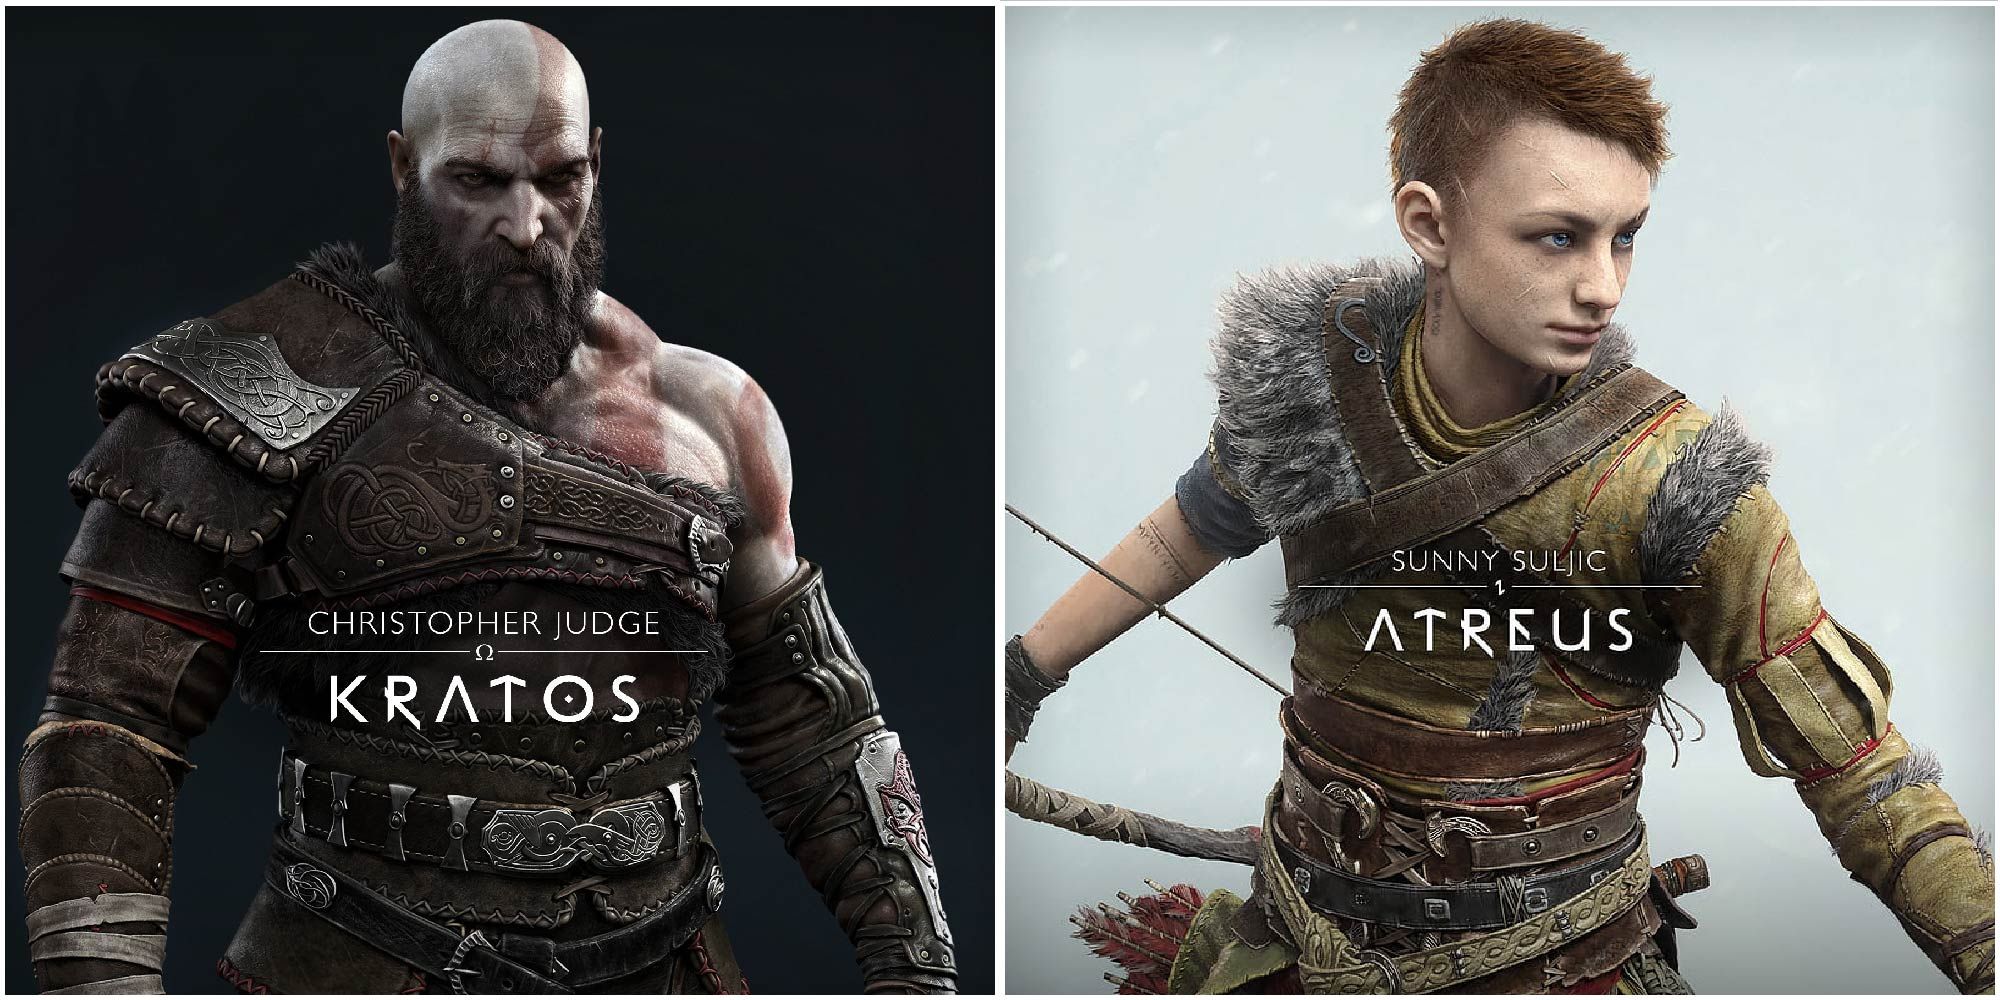 Kratos and Atreus, from God of War Ragnarok